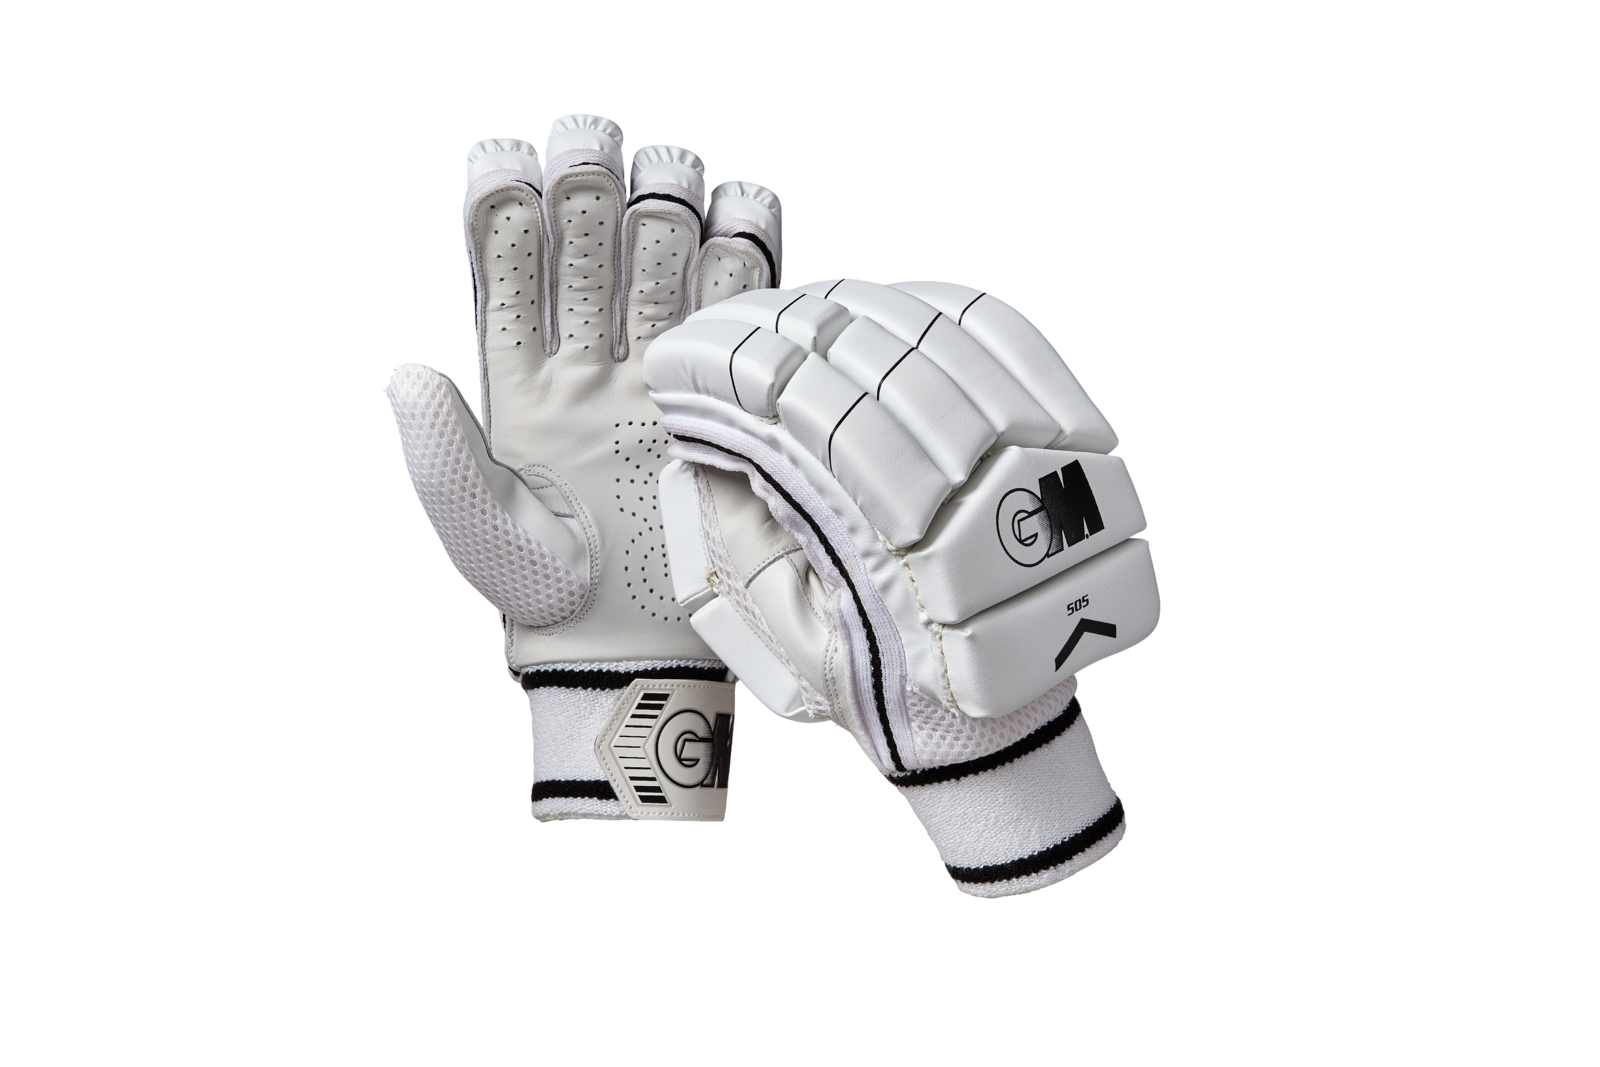 Gm 505 Cricket Gunn & Moore Batsman Glove Protective Batting Gloves 